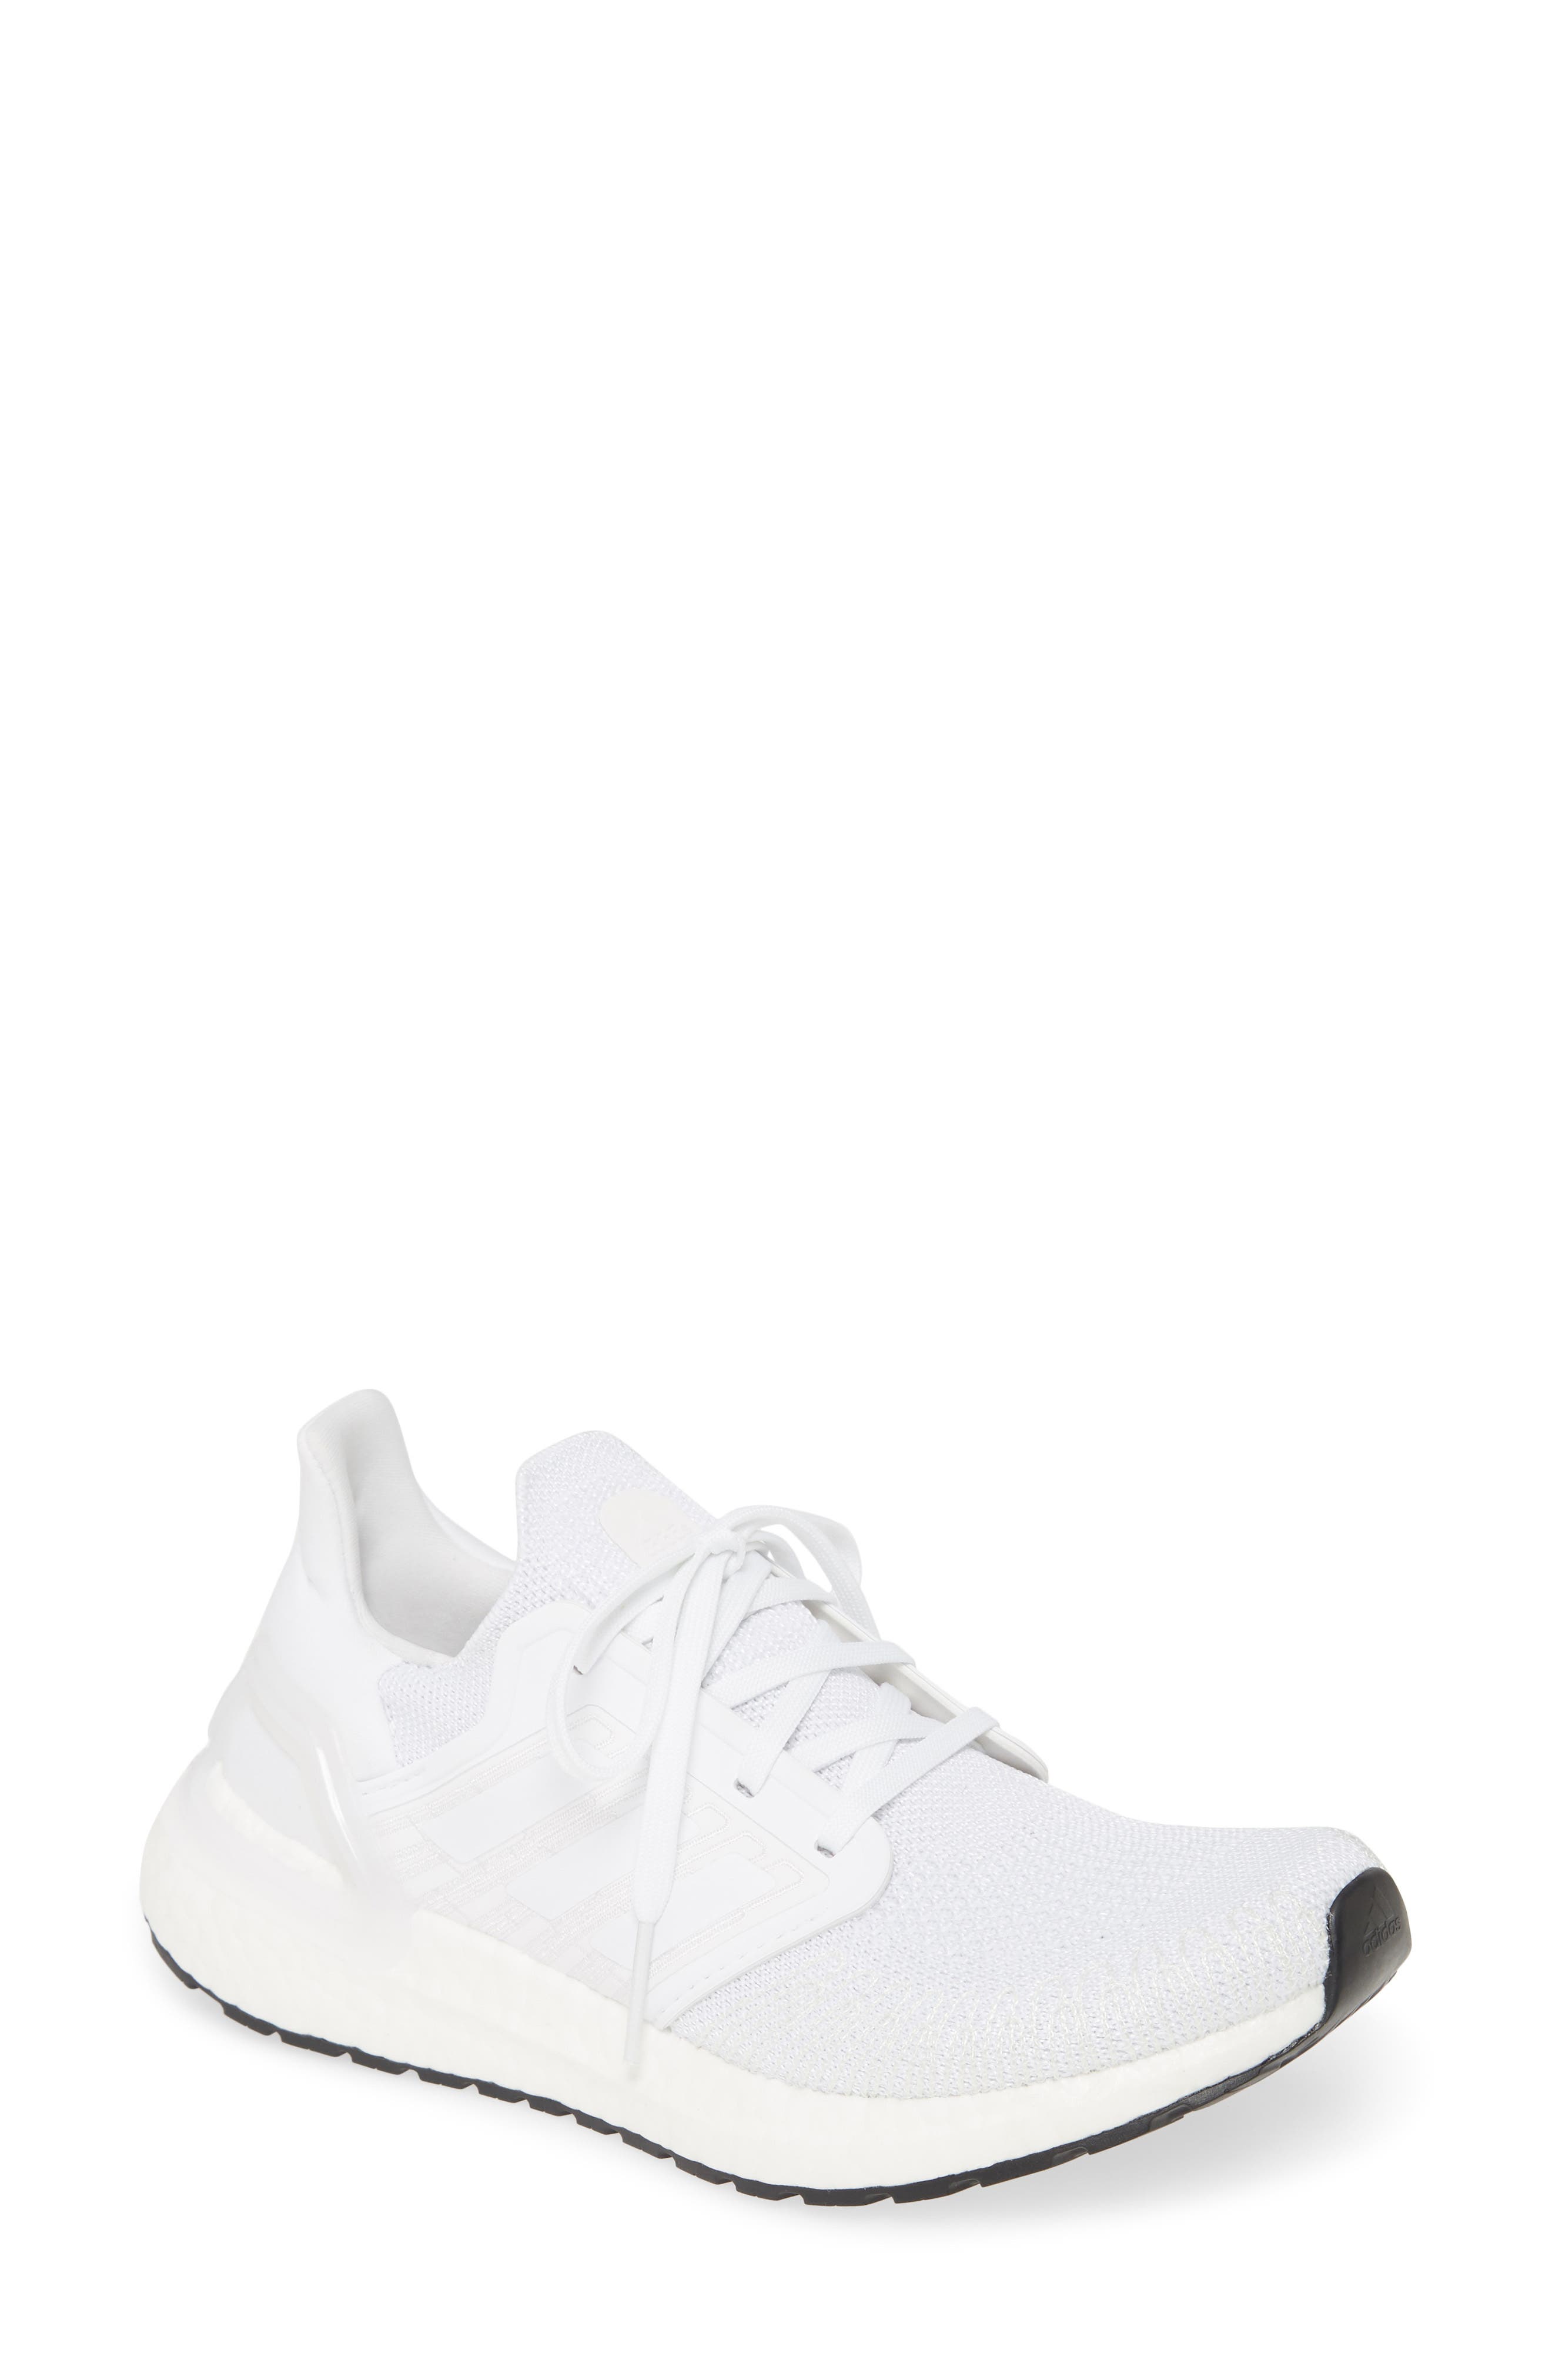 Adidas Originals Ultraboost 20 Running Shoe In Cloud White/ White/ Core Black